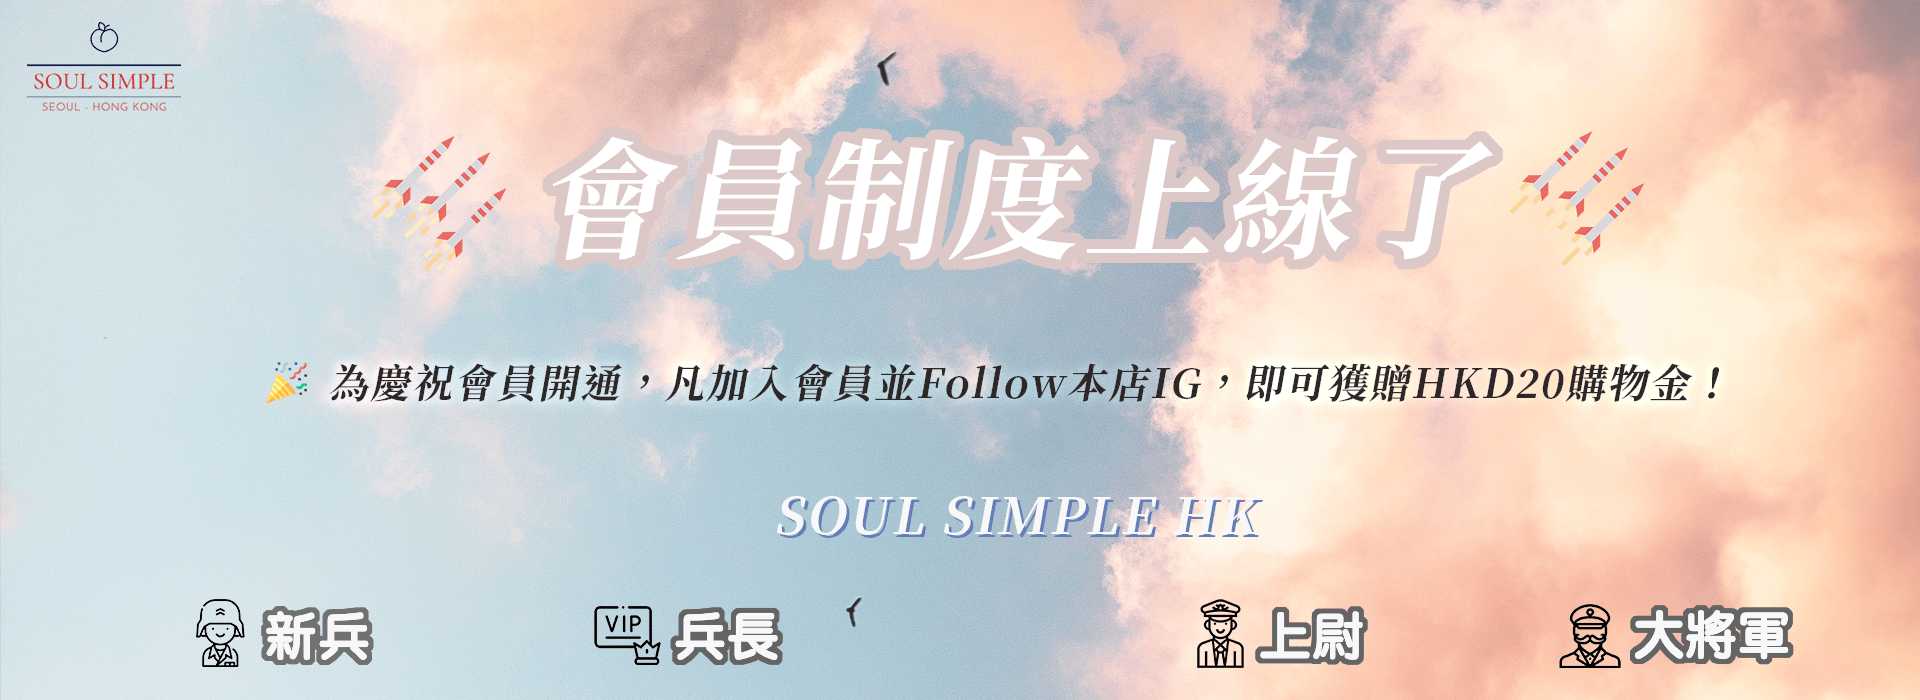 【SOUL SIMPLE HK會員制度上線了！】 - SOUL SIMPLE HK